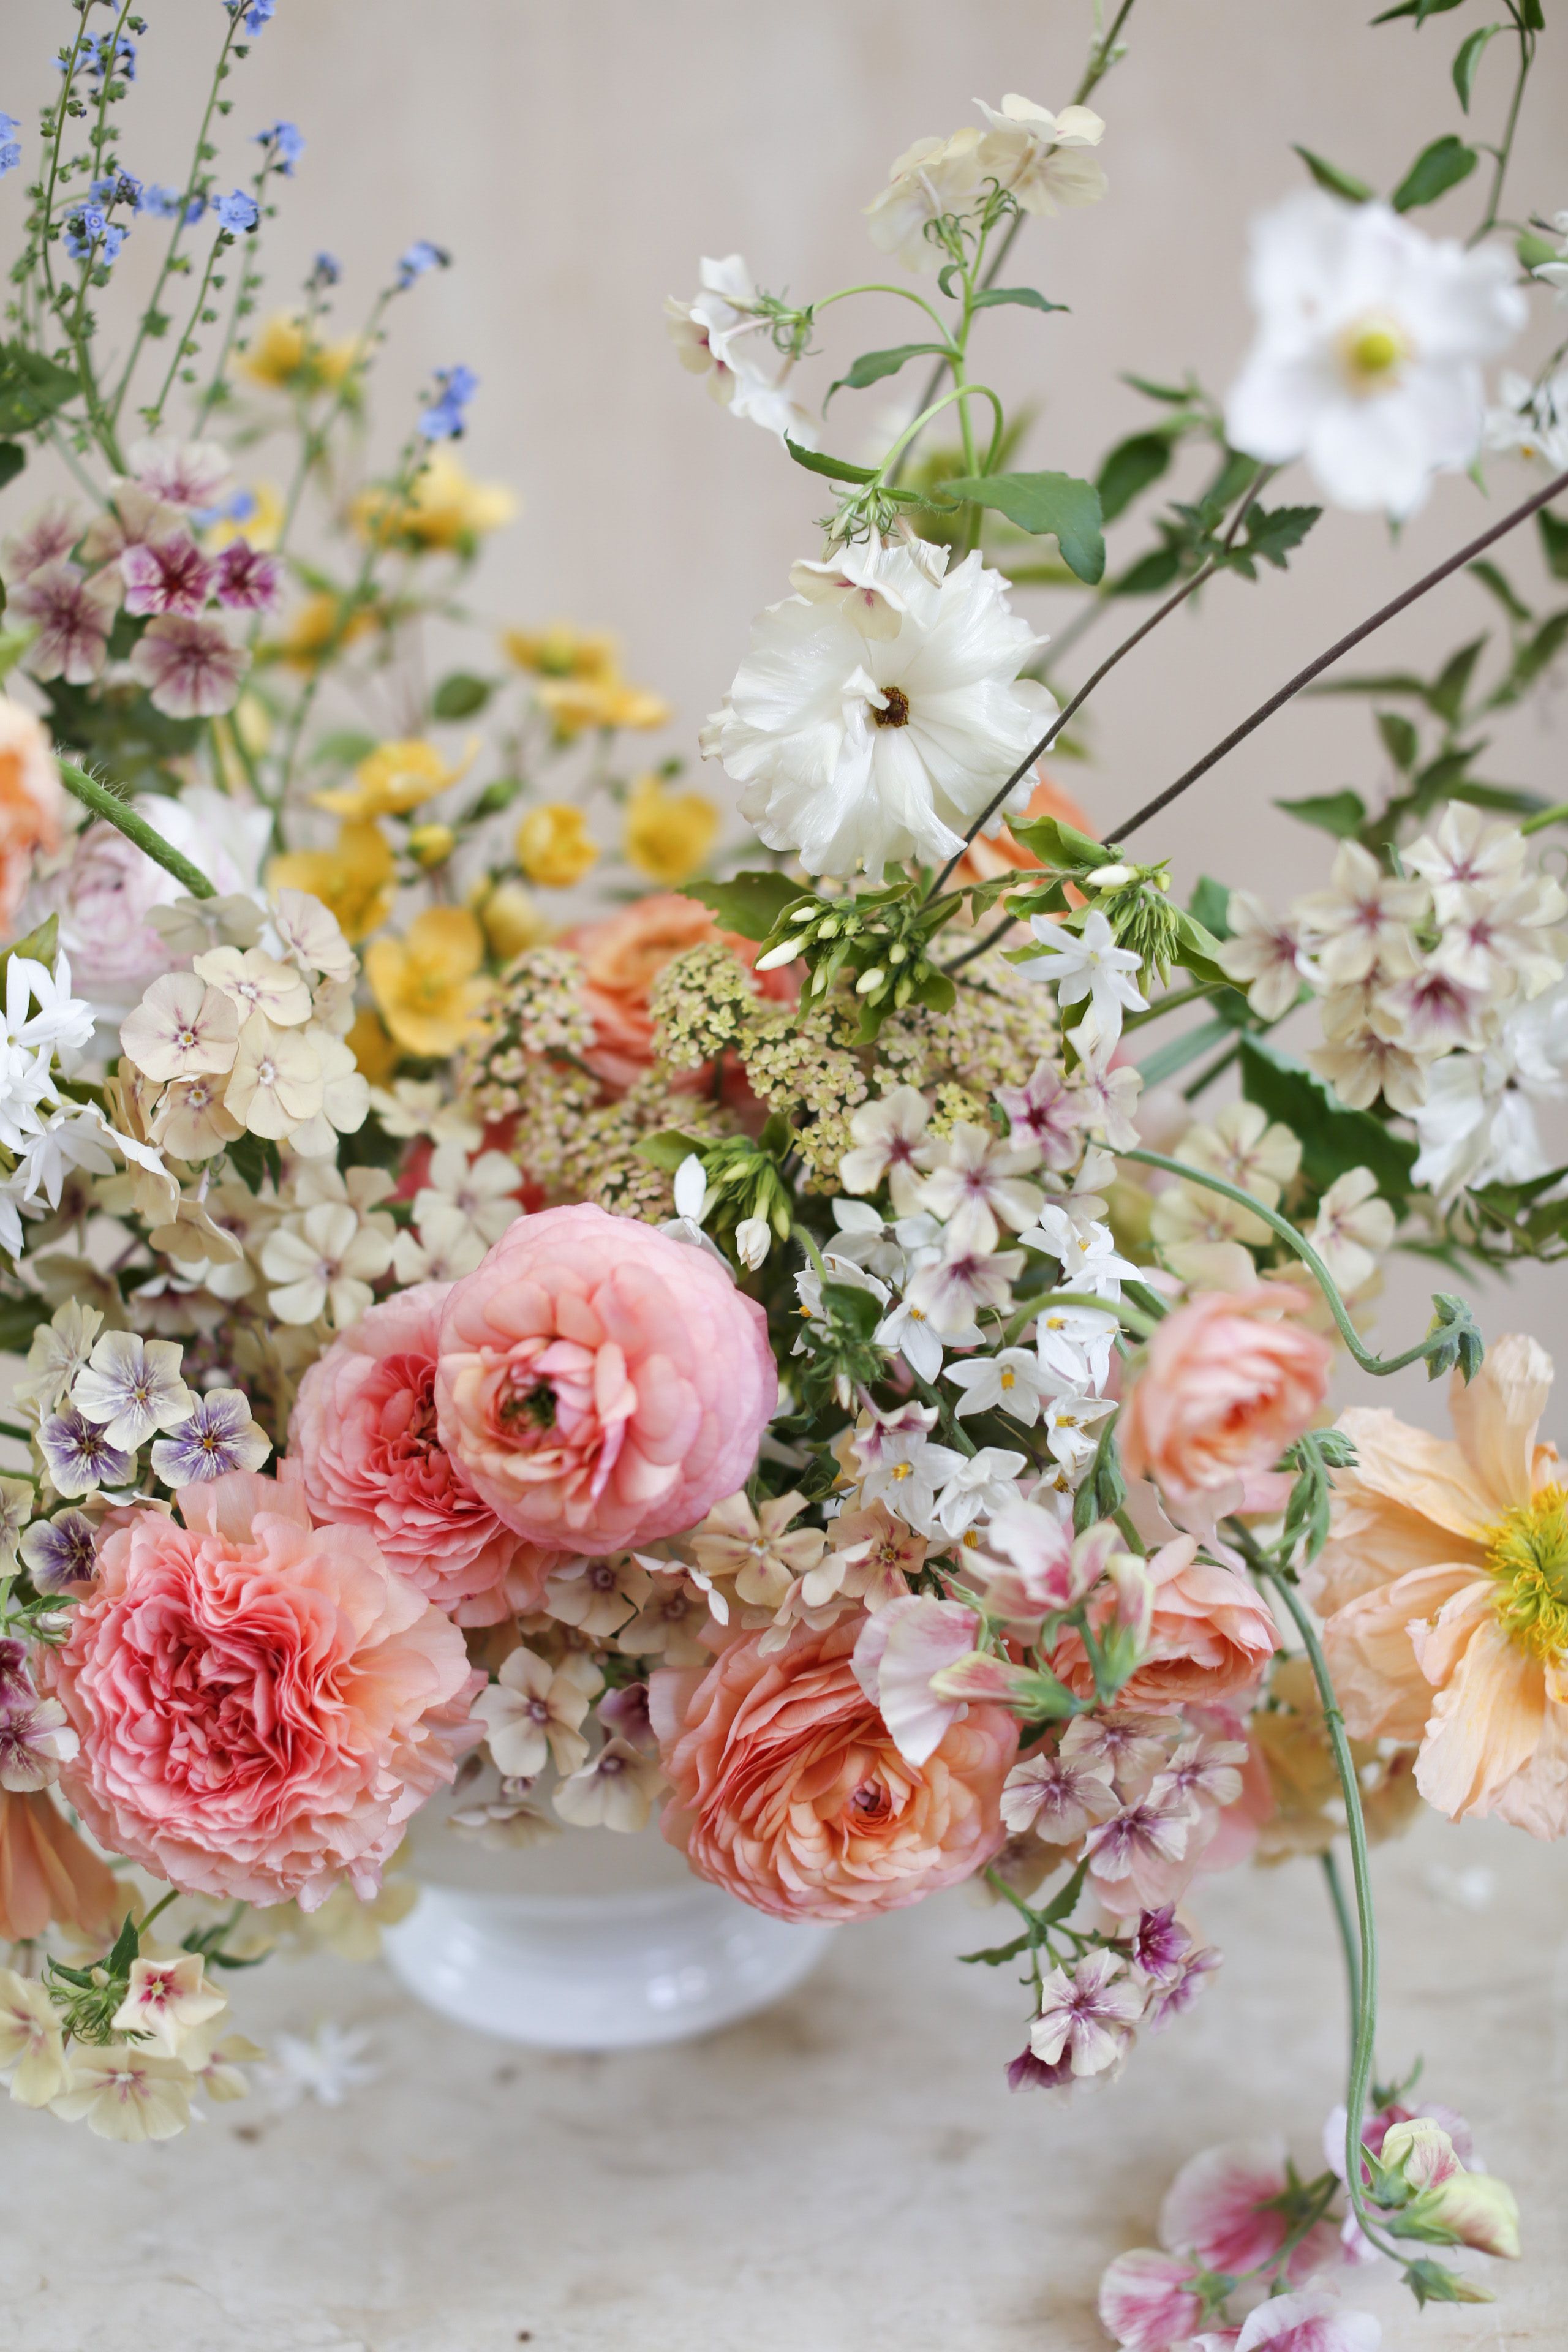 The Art of Ikebana — Minimalist Japanese Floral Design — Inspired